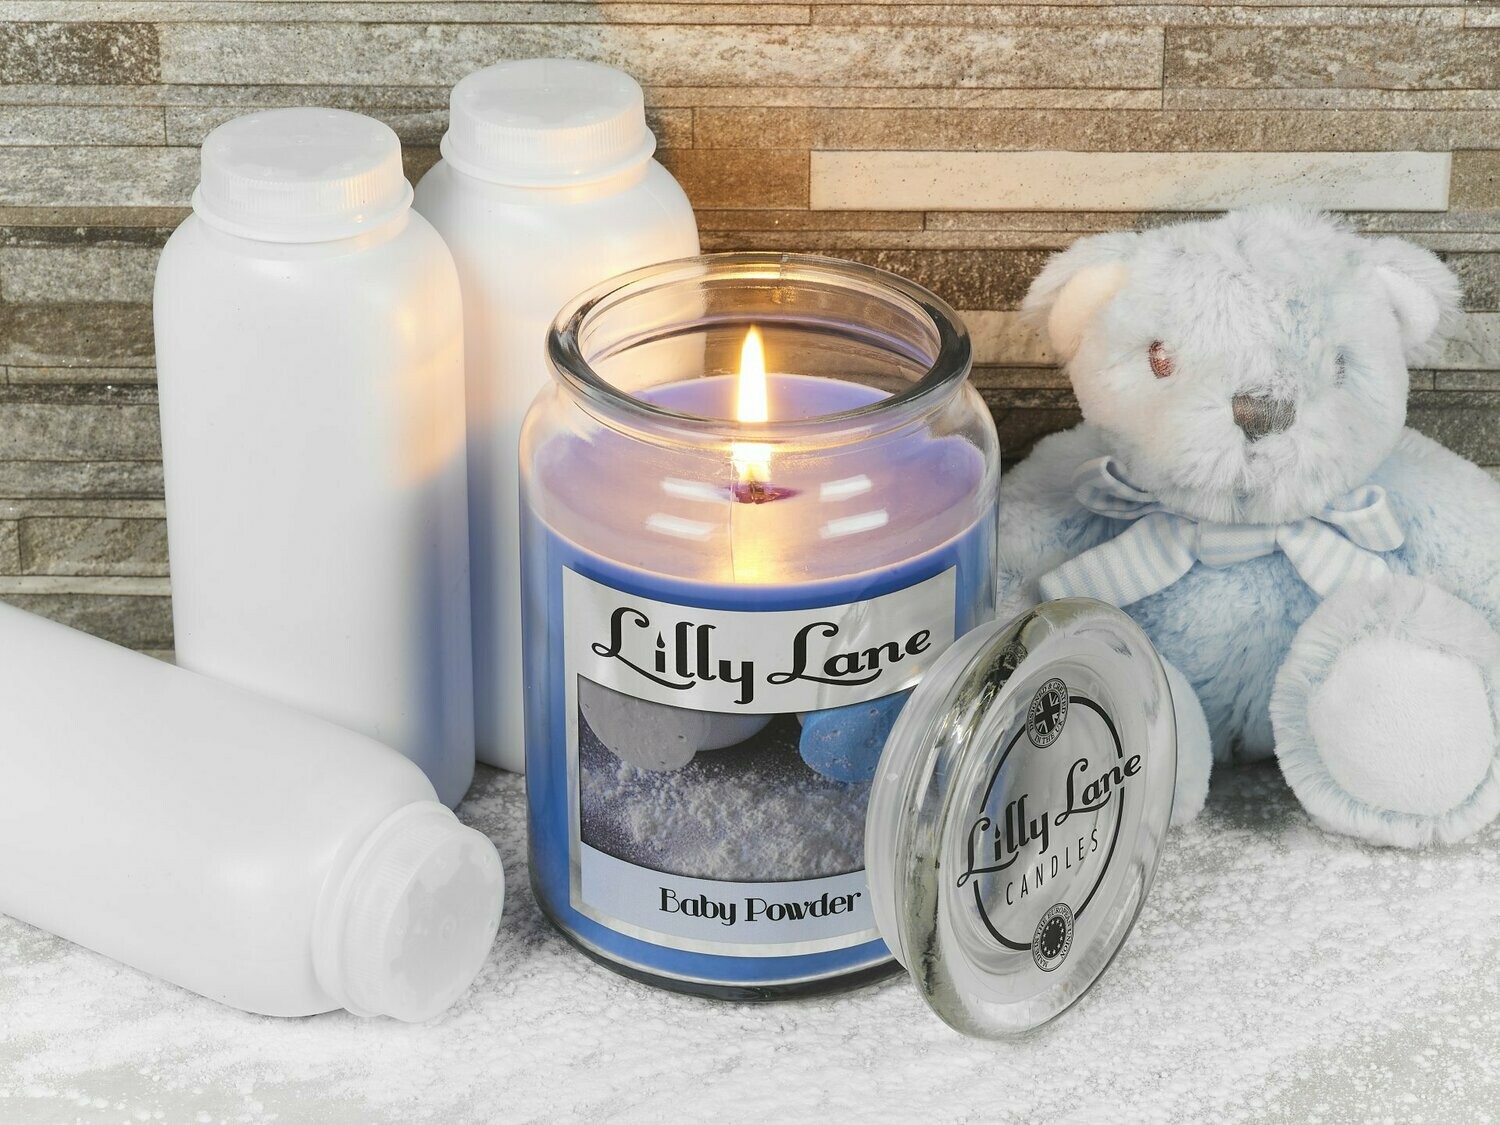 Lilly Lane Baby Powder 18oz Jar Candle